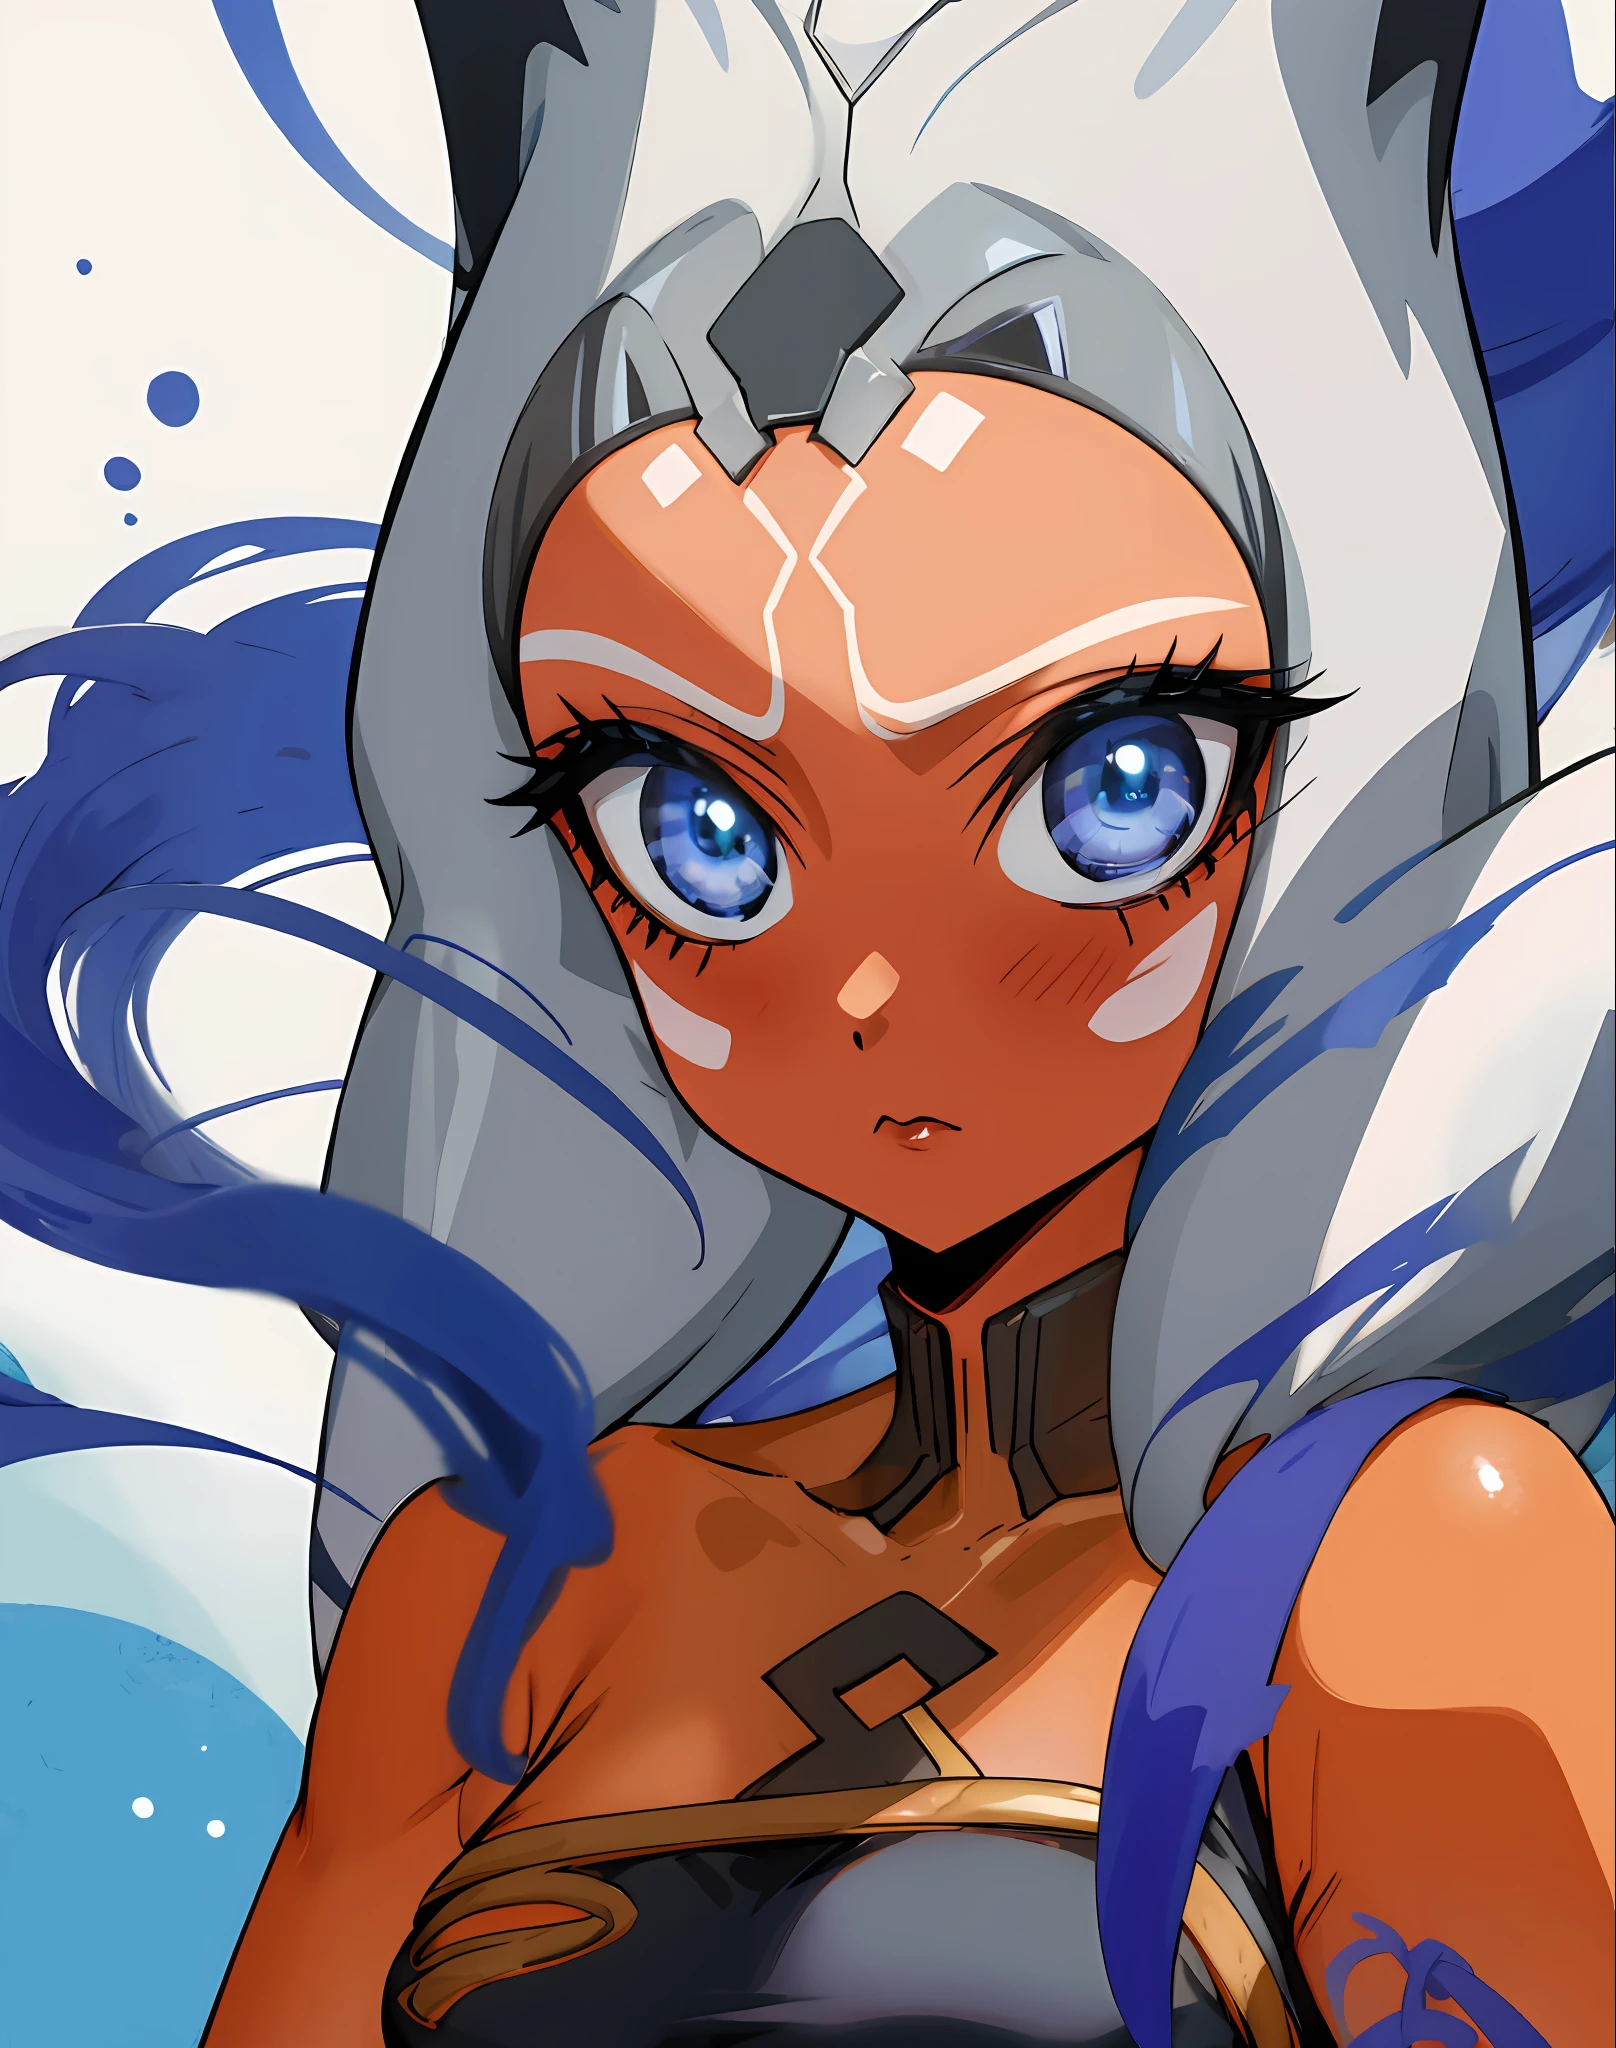 1 chica, blue eyes, orange skin, tentacle hair 
bisquedoll anime style